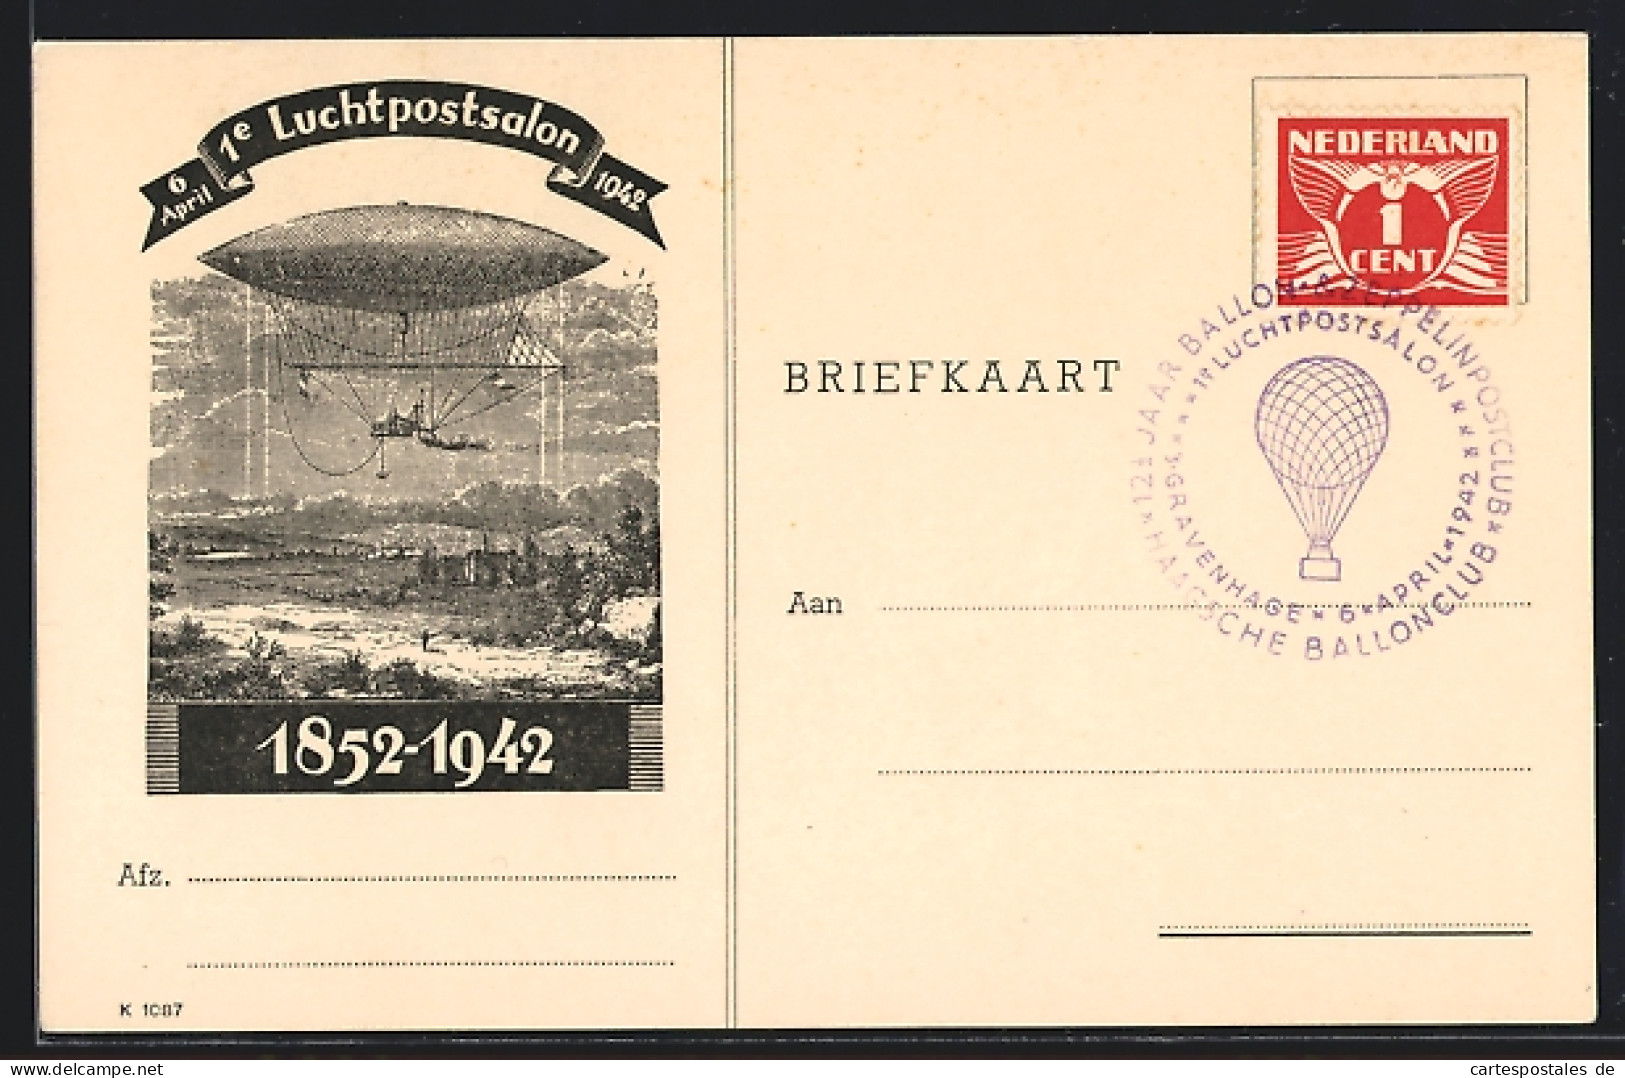 Künstler-AK Gravenhage, Erste Luchtpostsalon, April 1942, Zeppelin, 1852-1942  - Francobolli (rappresentazioni)